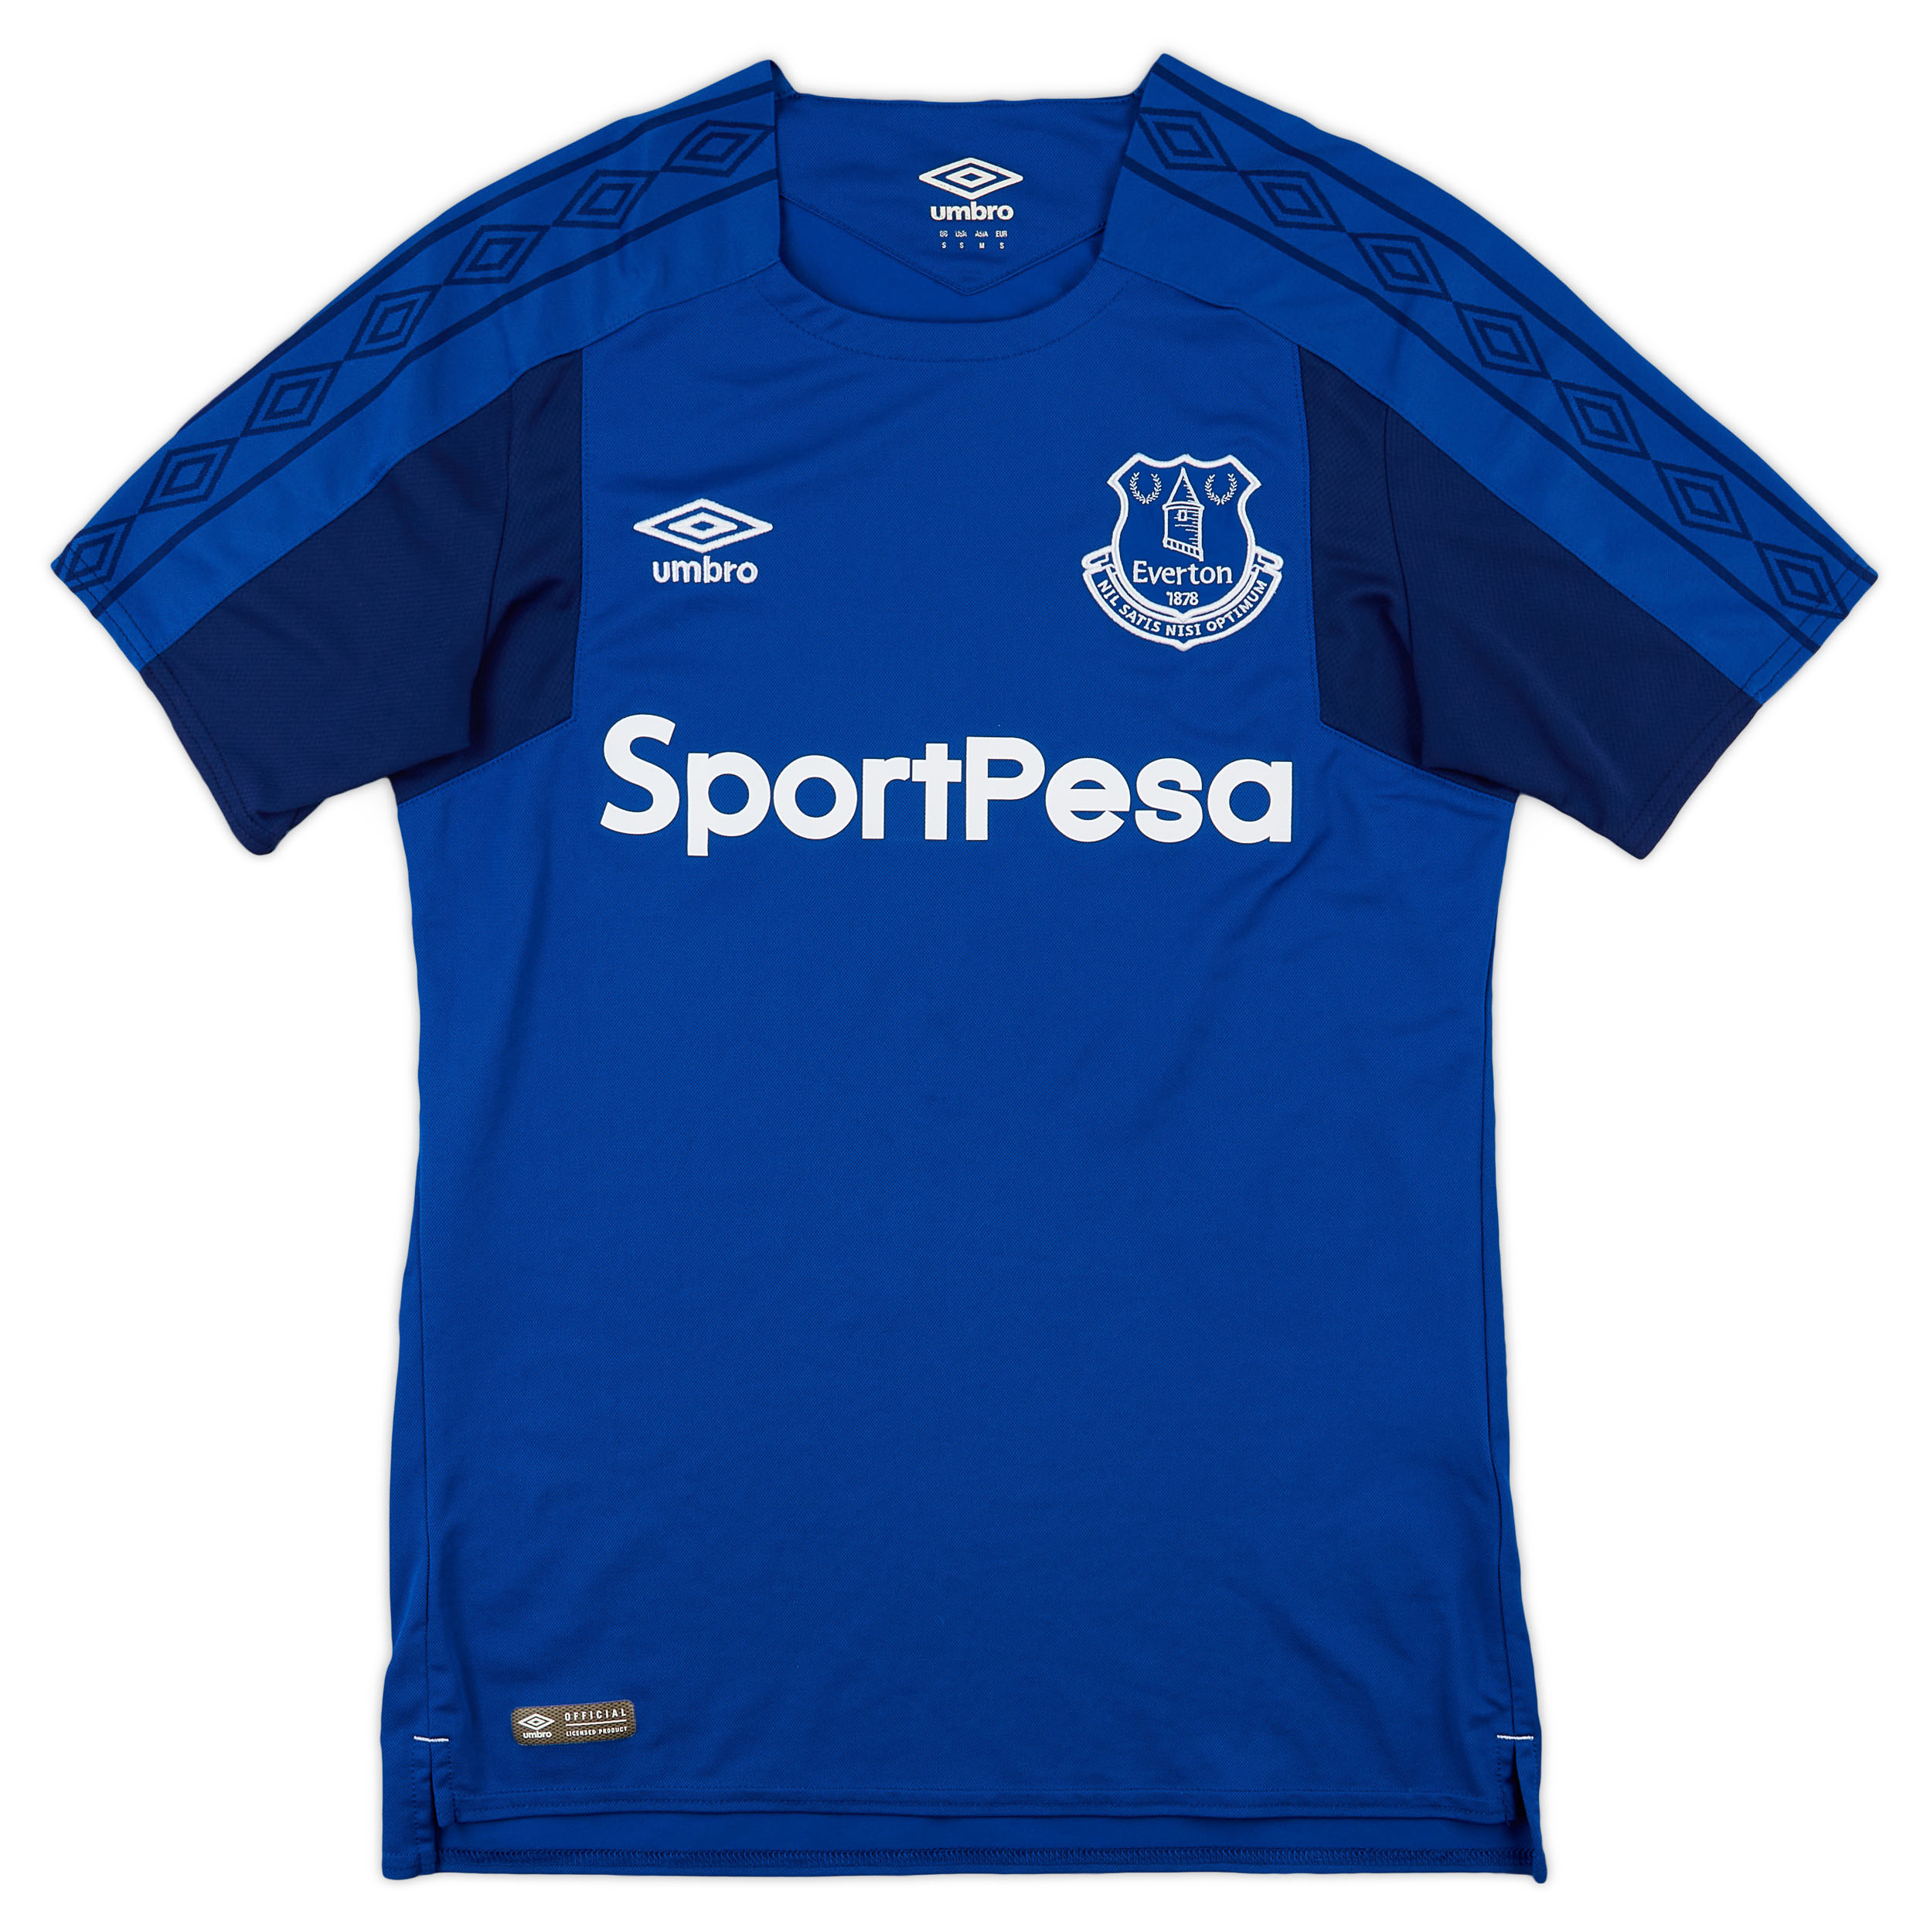 2017-18 Everton Home Shirt - 9/10 - ()